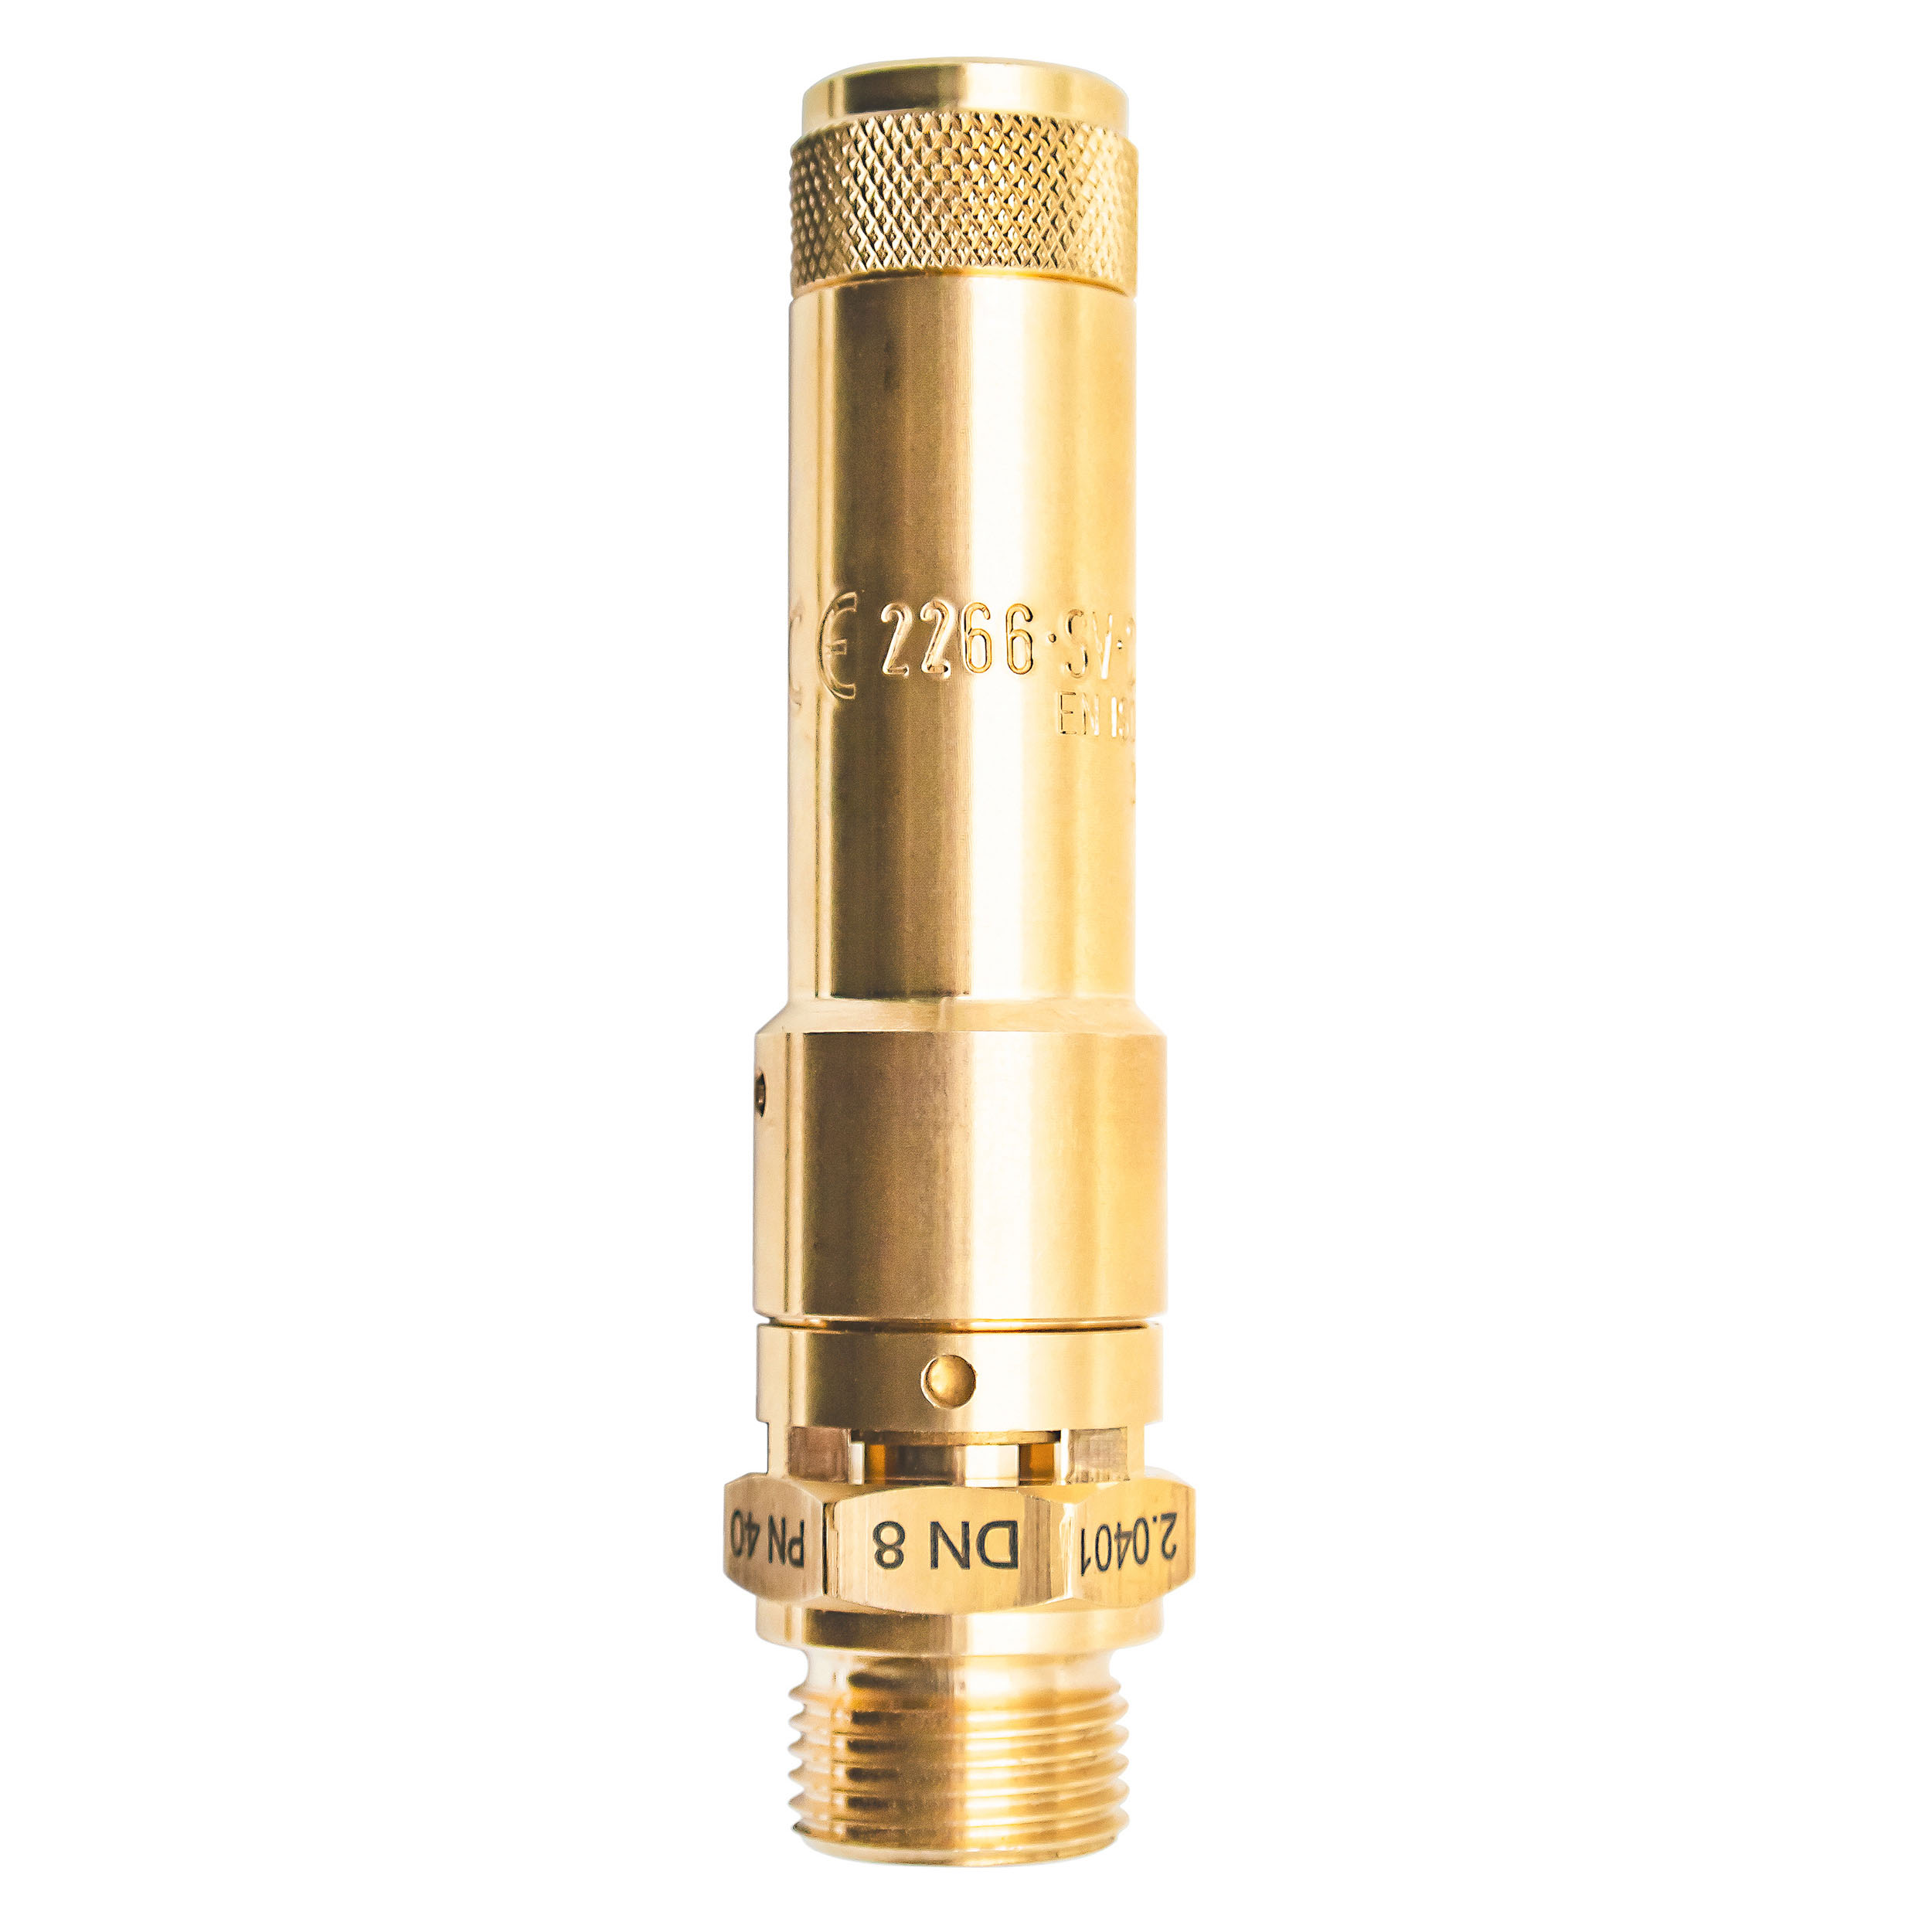 Savety valve component tested DN 8, G¼, set pressure: 18.0 bar (261 psi)